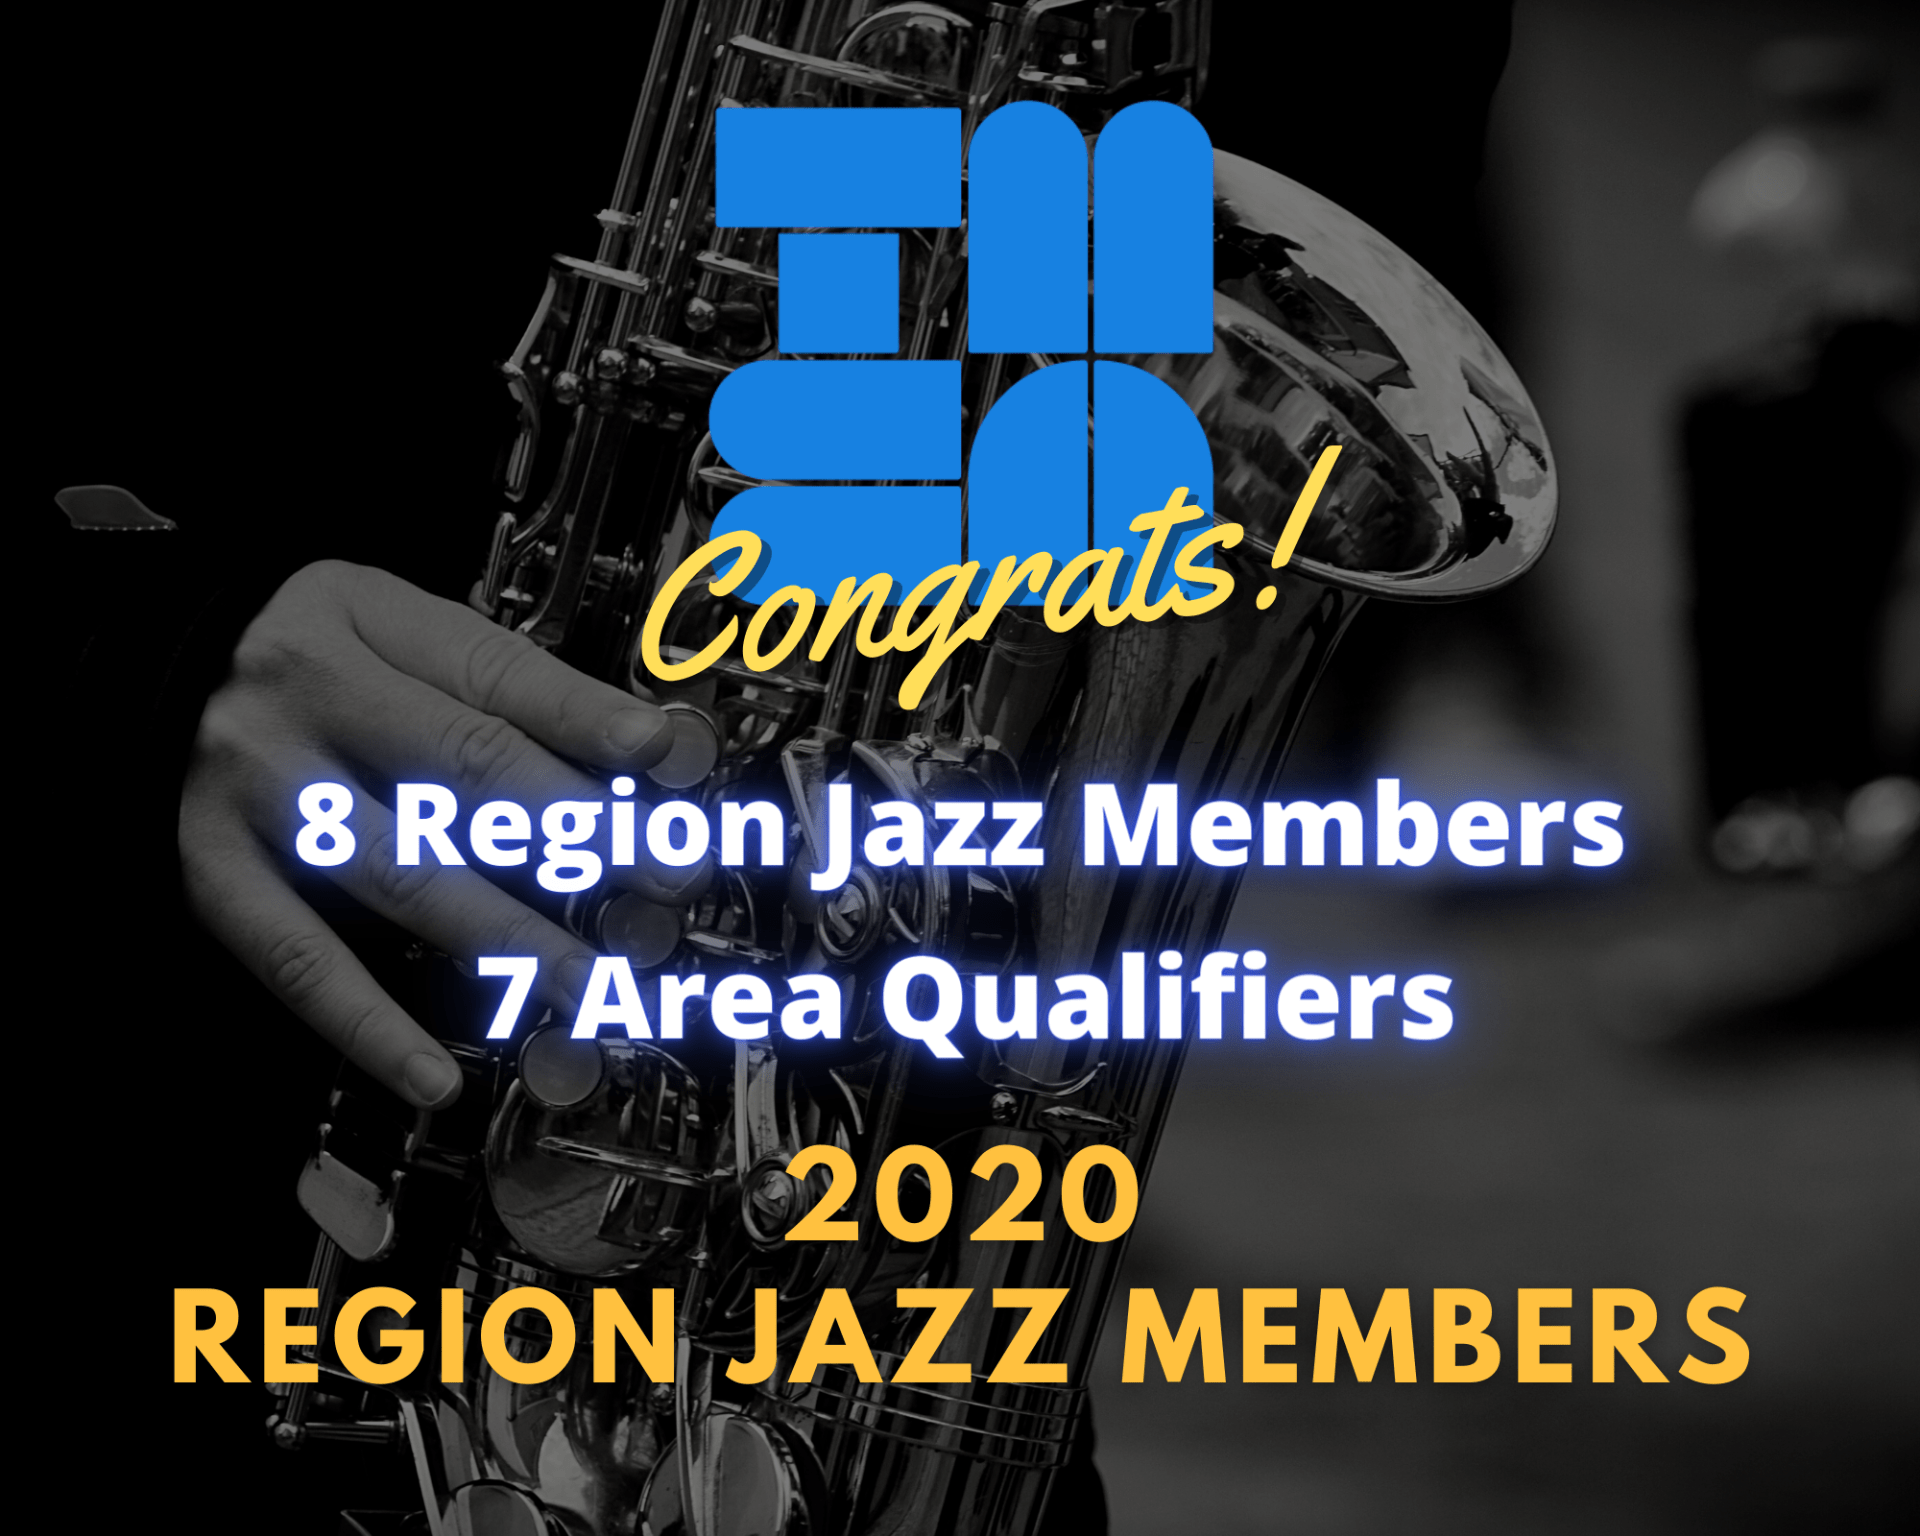 Region Jazz Success!